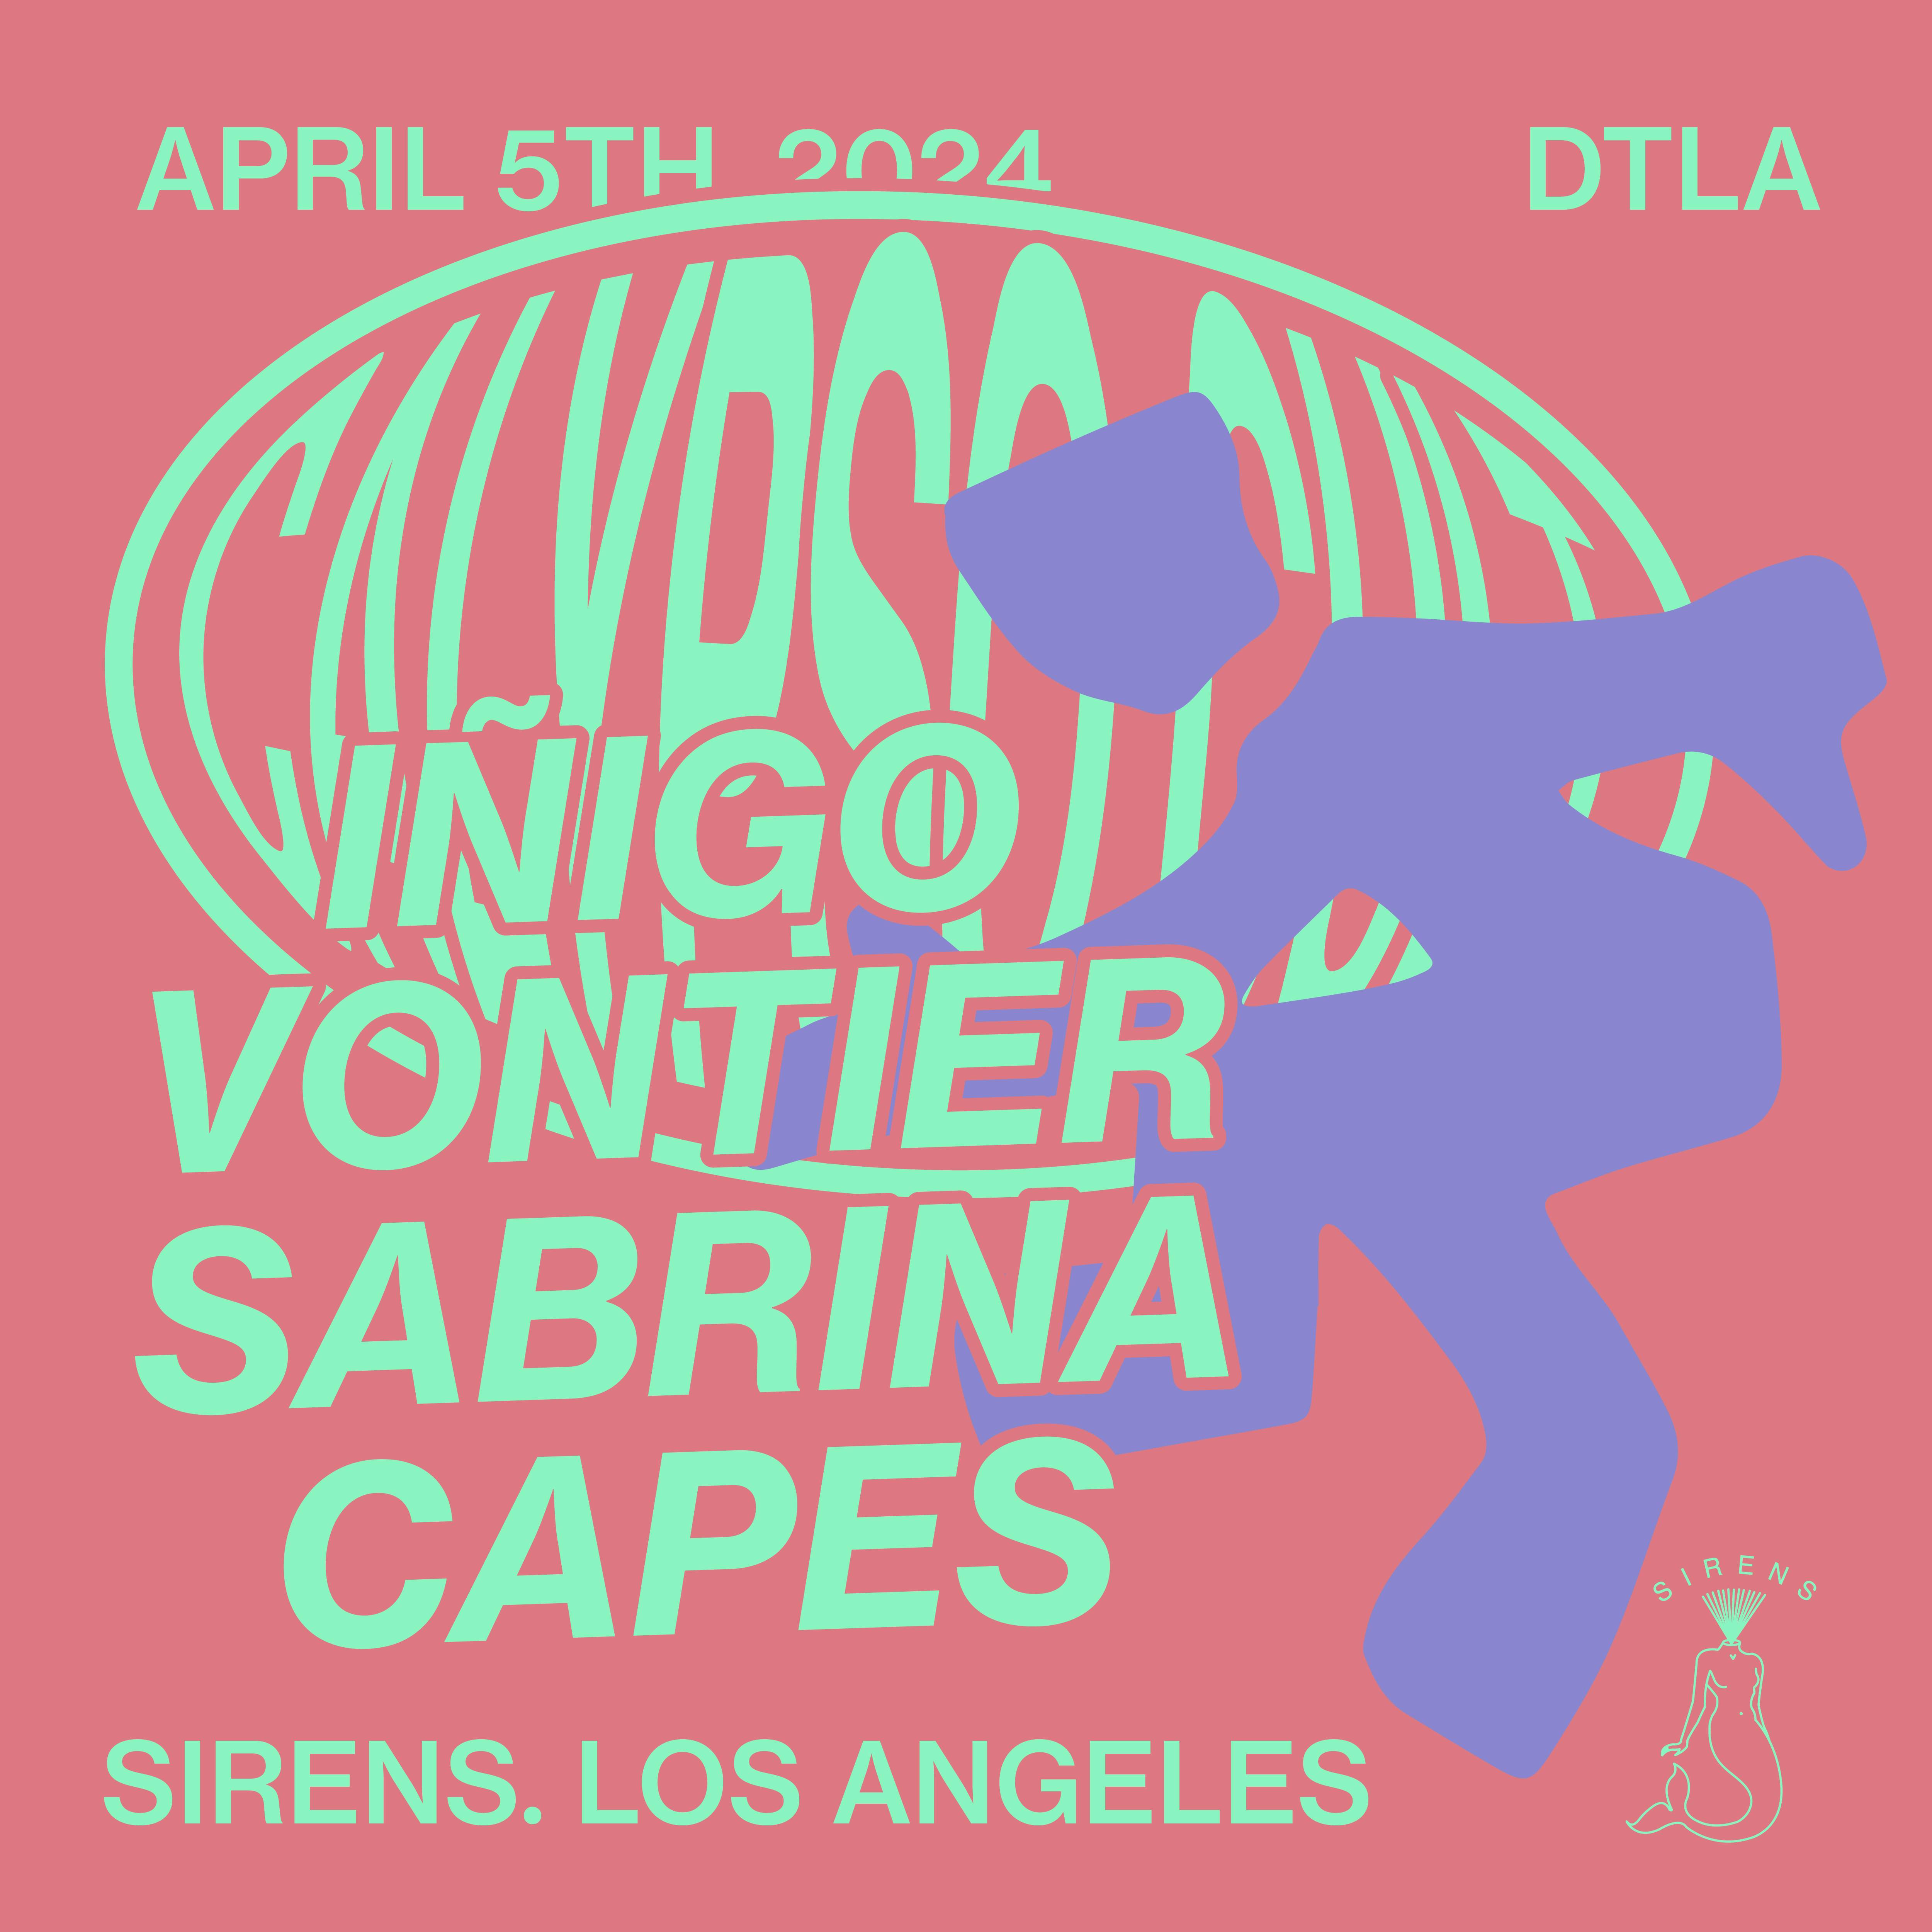 CALYPSO CVLT Los Angeles: Iñigo Vontier, Sabrina, Capes - Página frontal